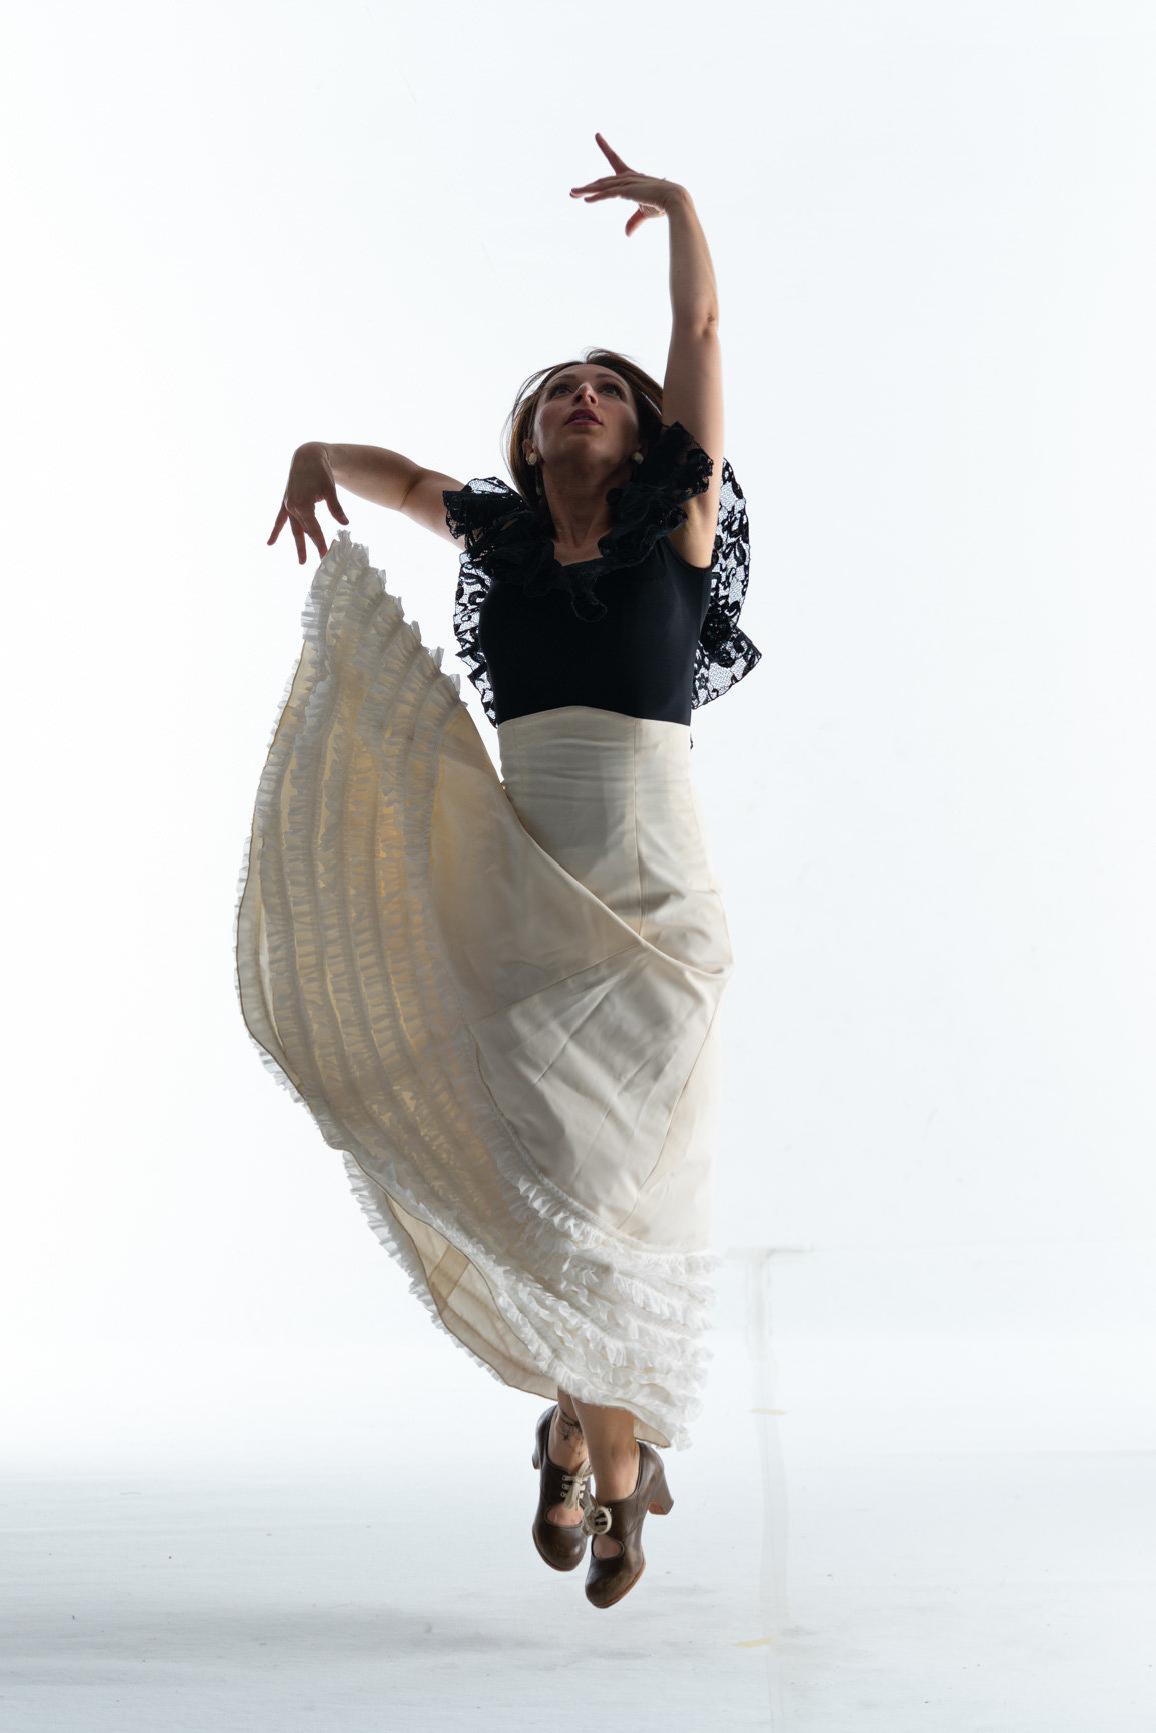 La Balandra danseuse flamenco marseille spectacle aix en provence arles nimes fos sur mer martigues